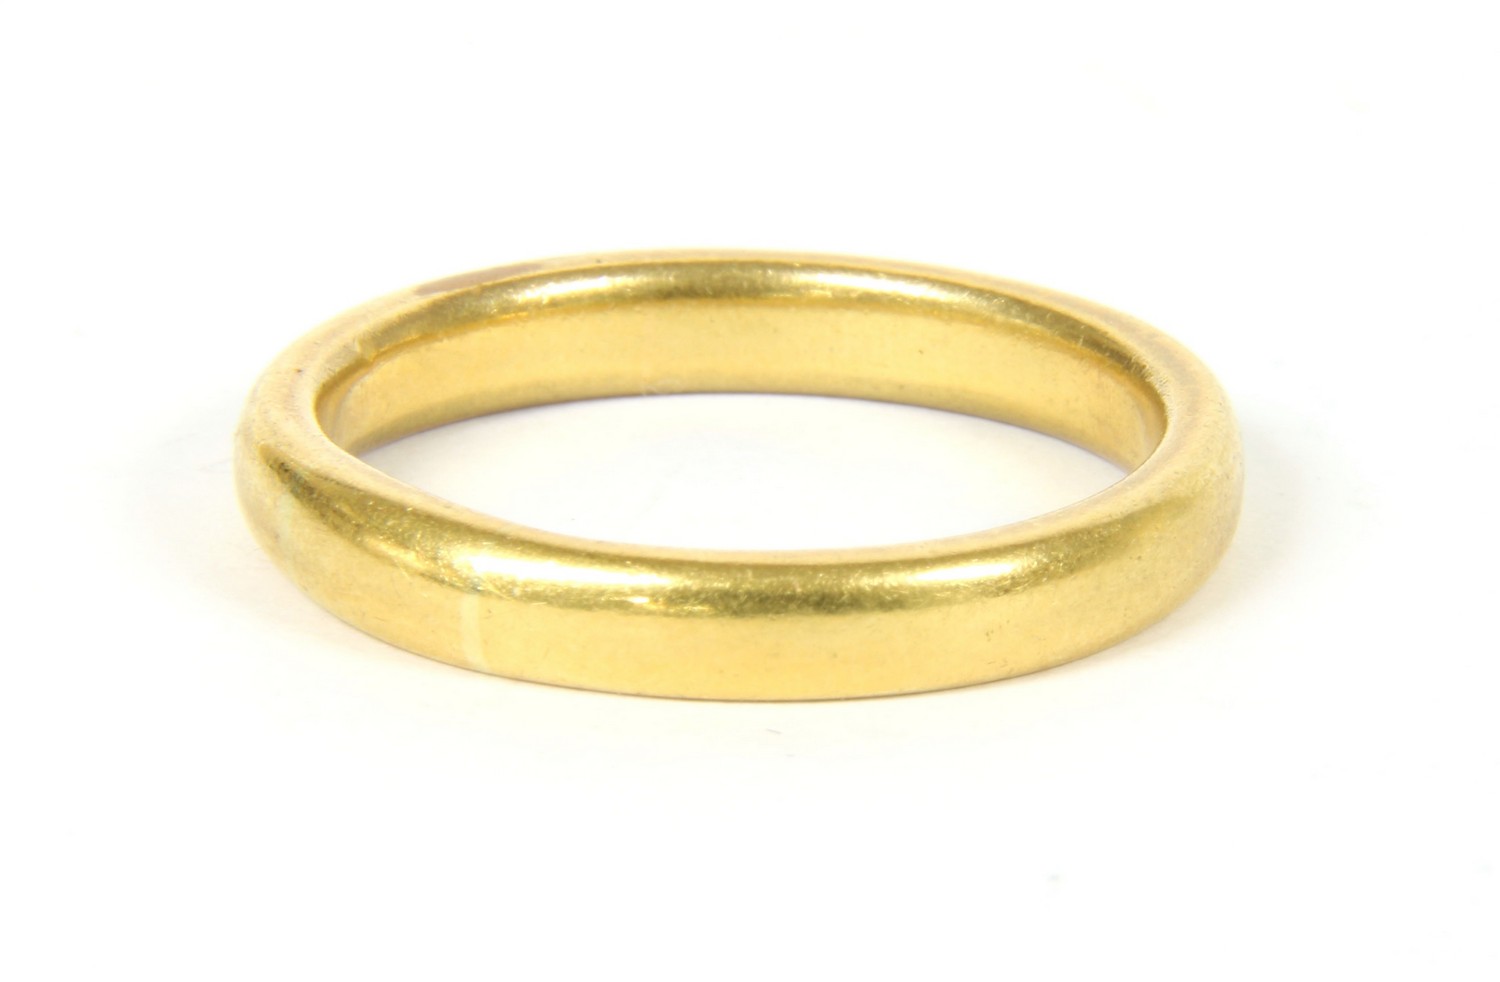 A gold wedding ring